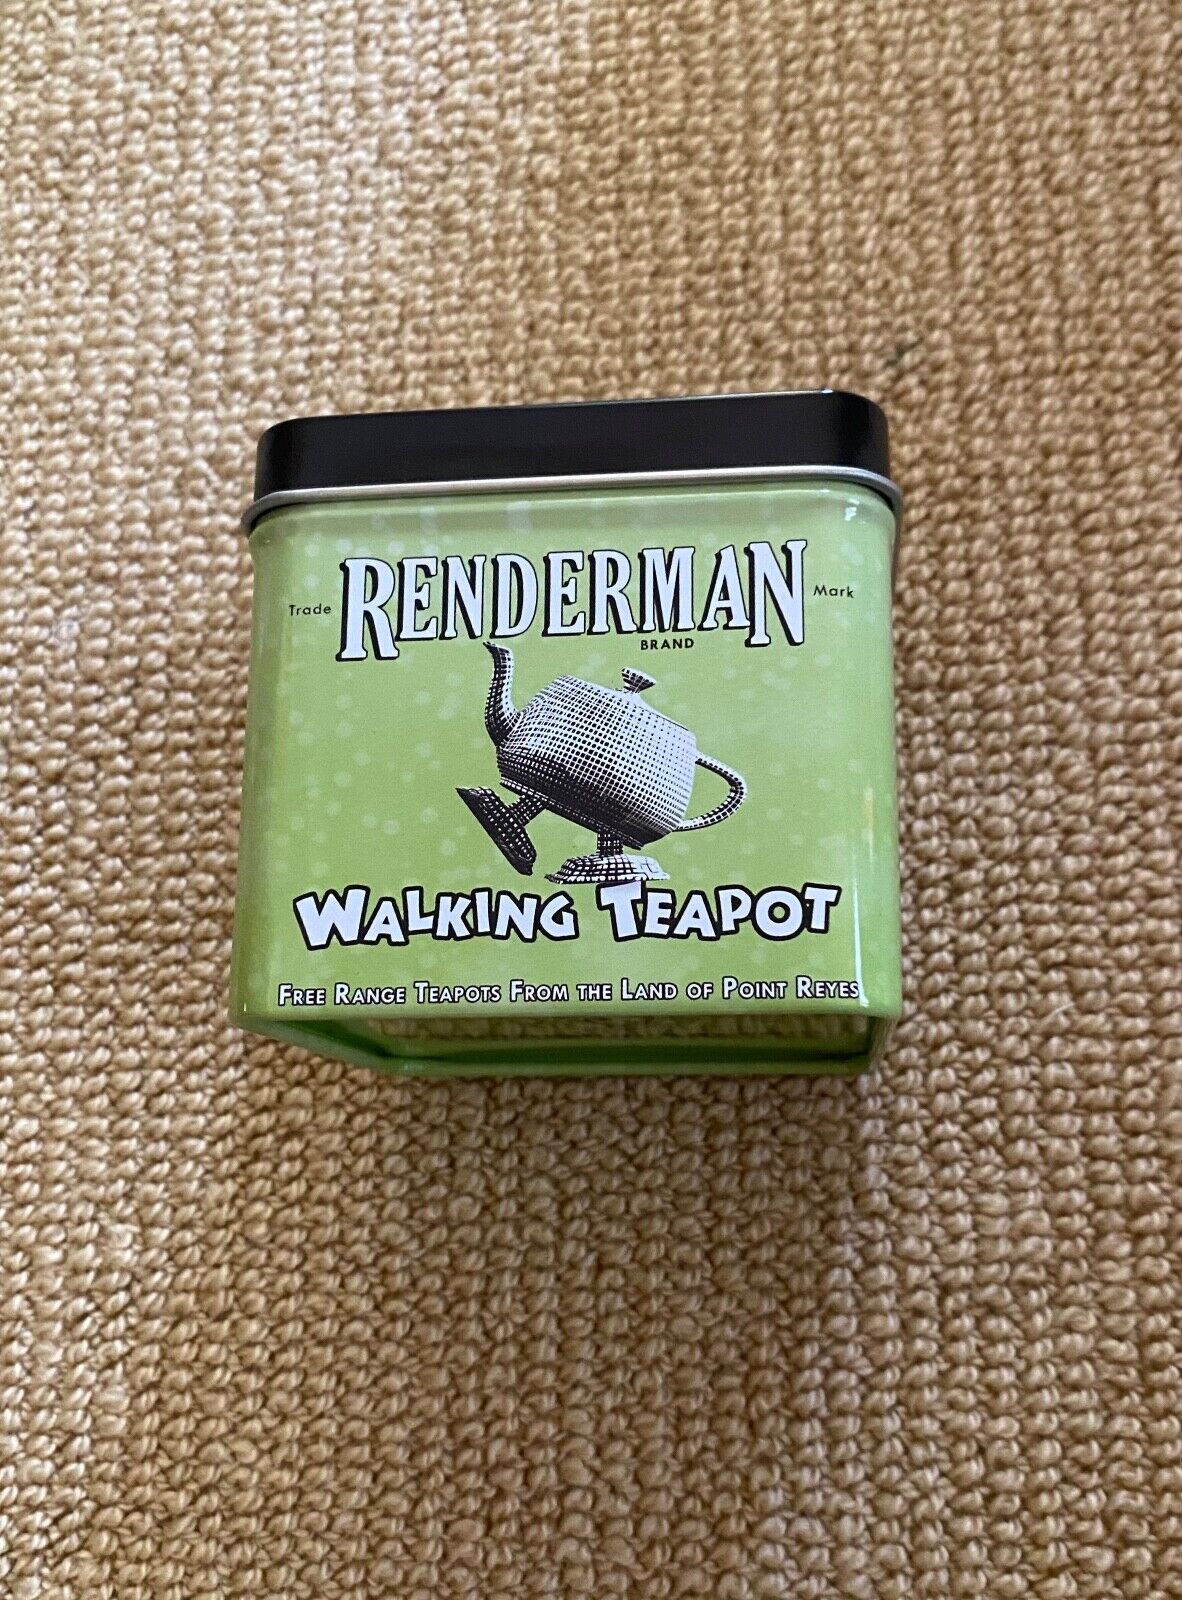 Renderman Pixar Dielectric Denizen Walking Teapot 2013 1895/3000